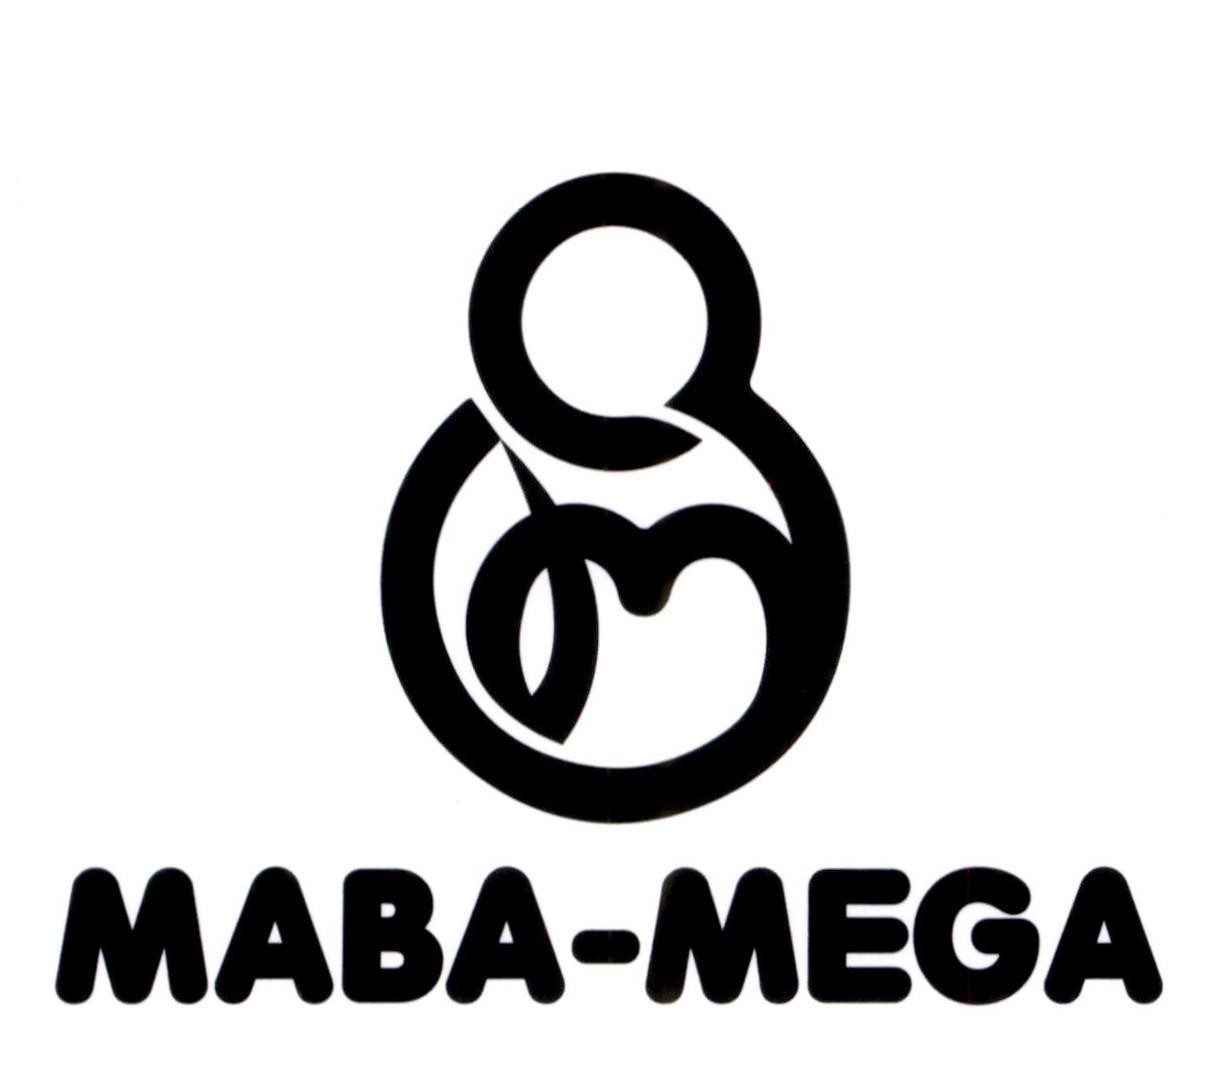 MABA-MEGA